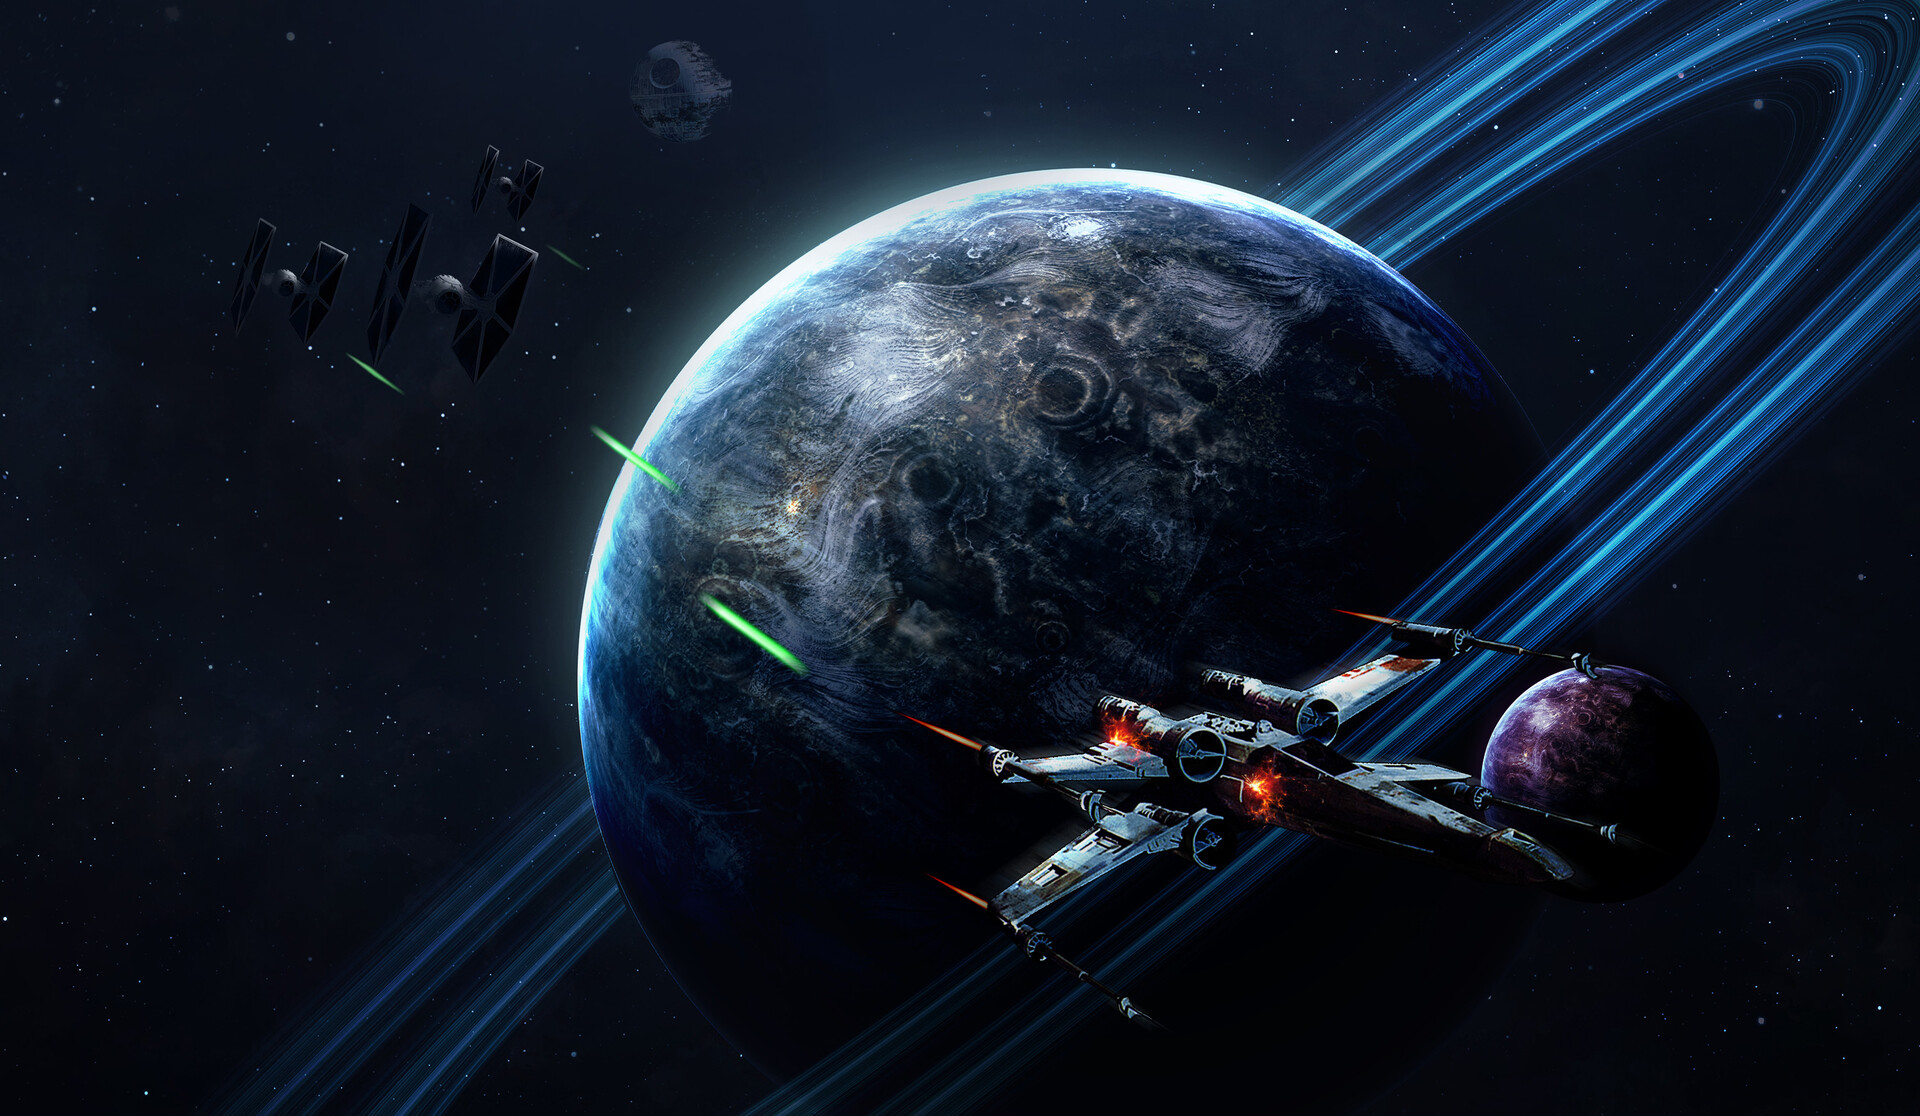 Sci Fi Star Wars X Wing Tie Fighter Planet Death Star Star Wars Planet 3177575 Hd Wallpaper Backgrounds Download